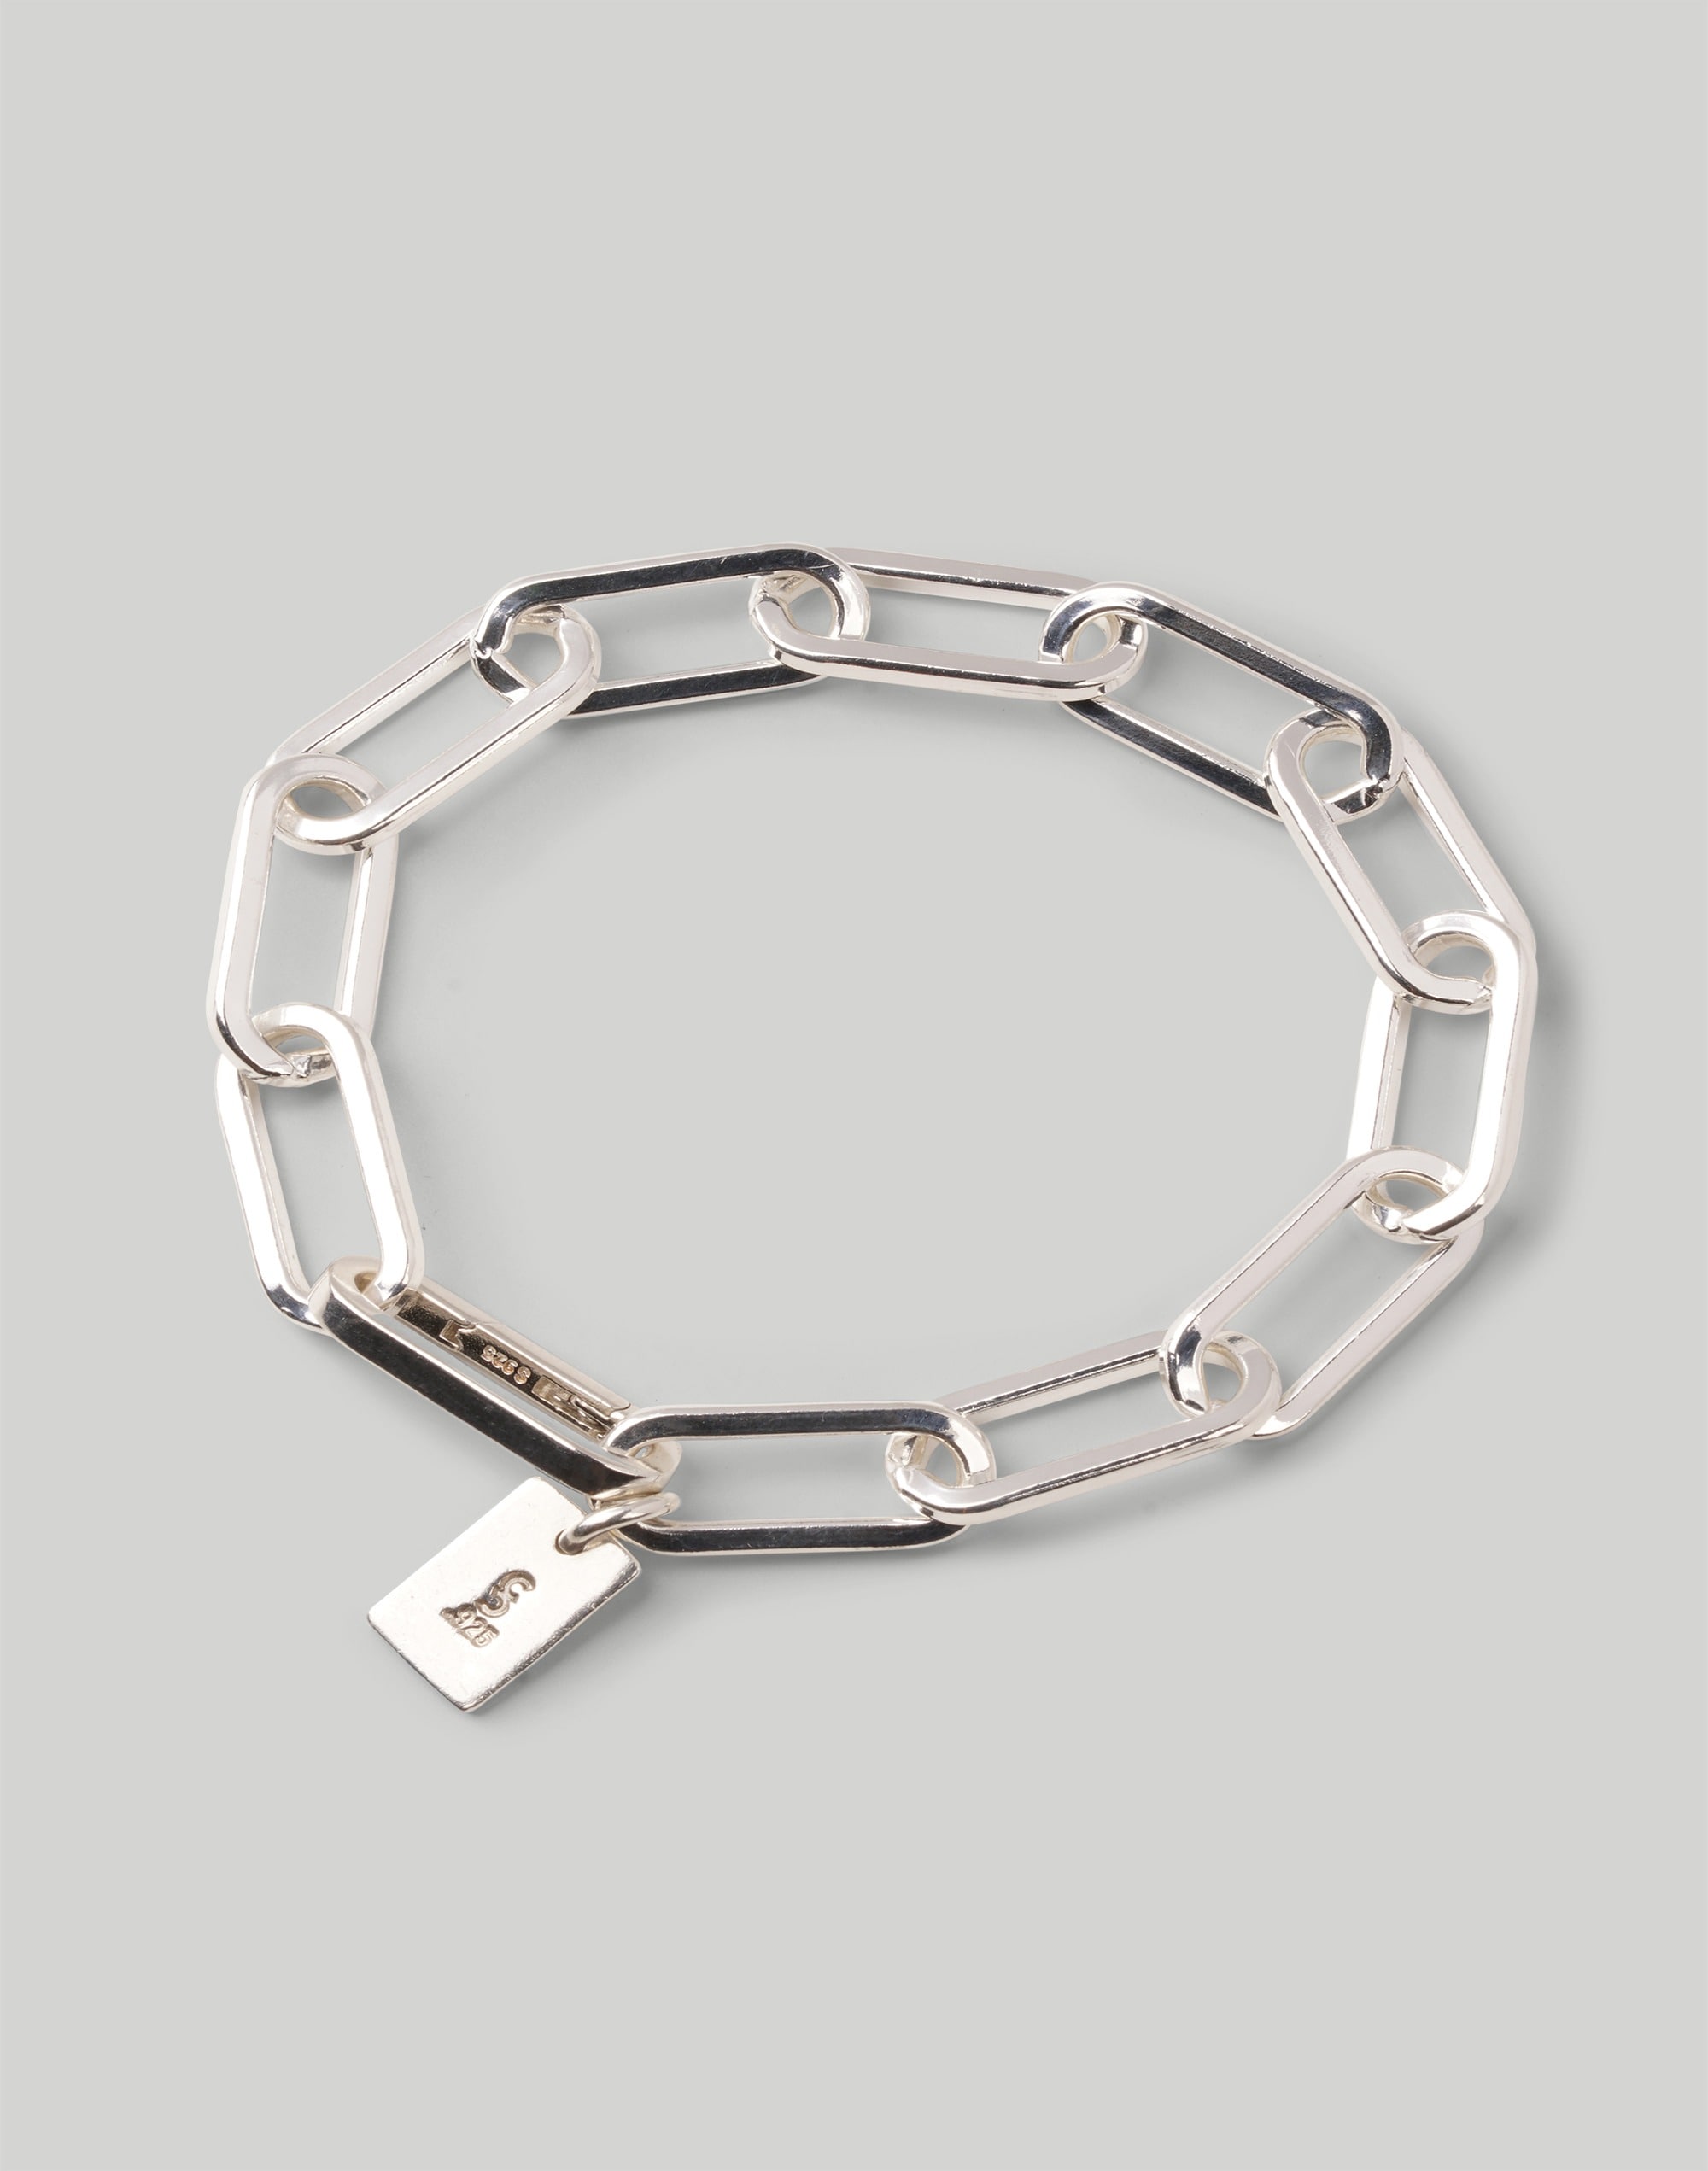 CHARLOTTE CAUWE STUDIO Chunky Link Bracelet in Sterling Silver